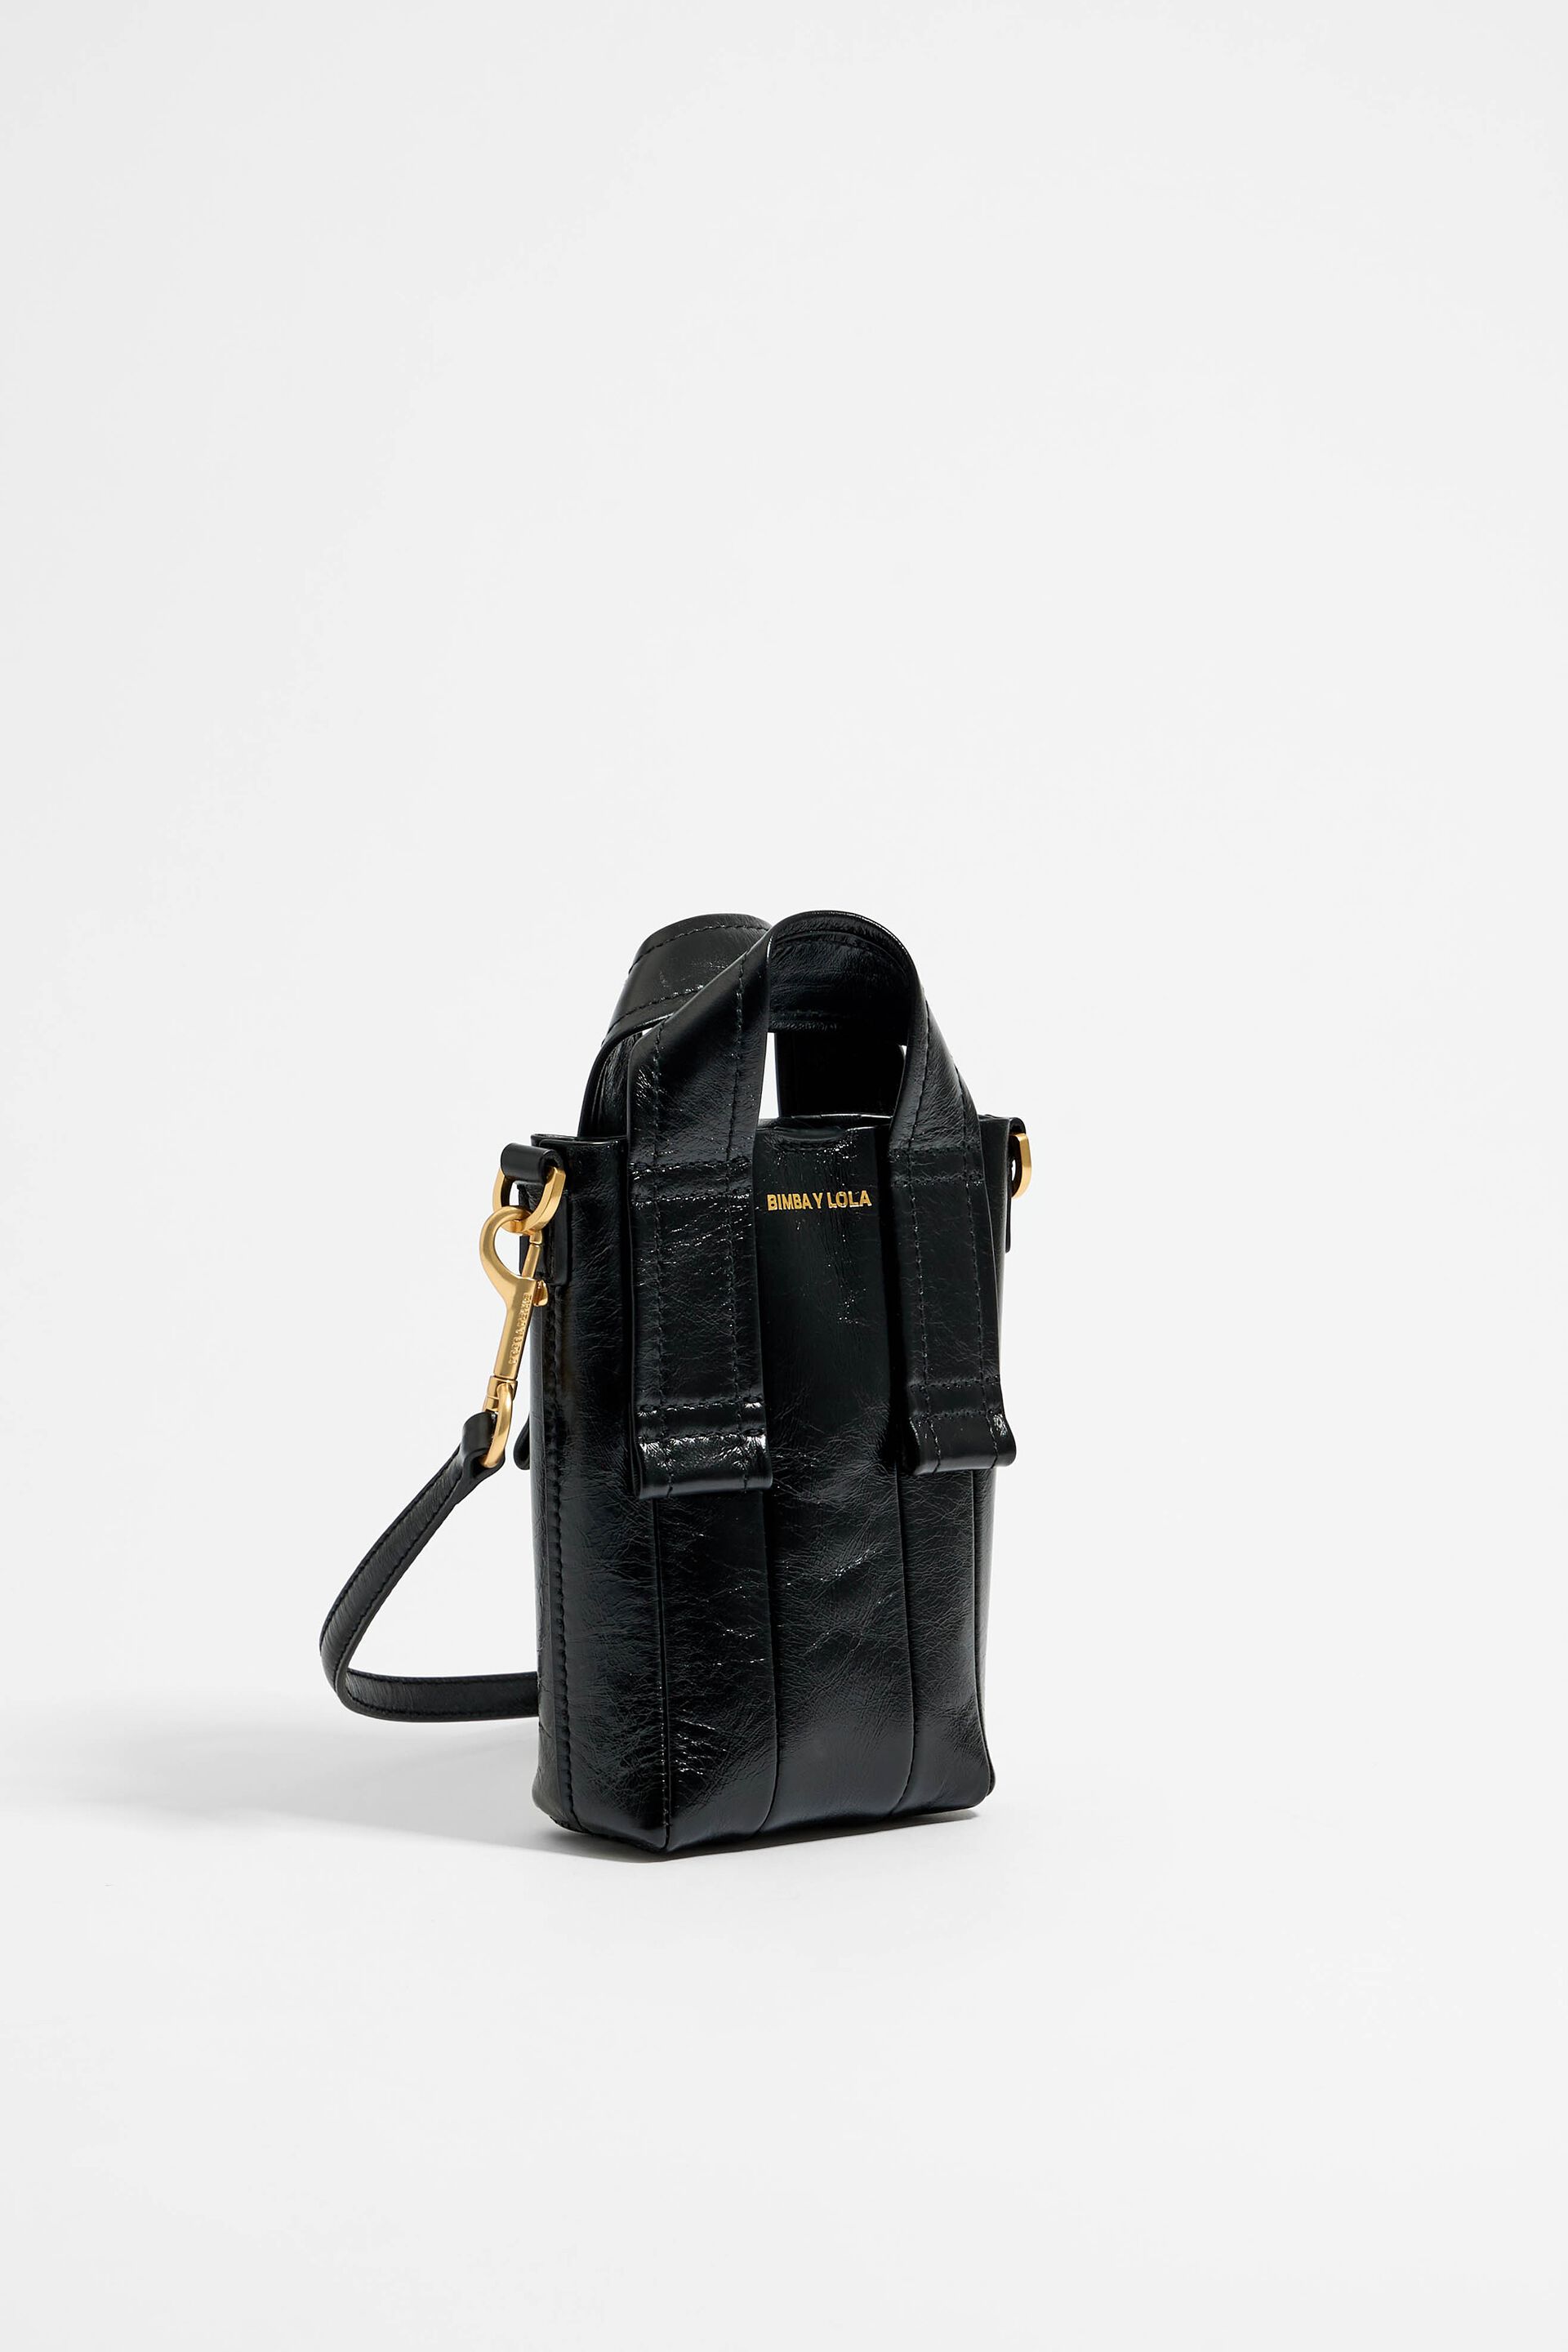 S black leather Pelota bag